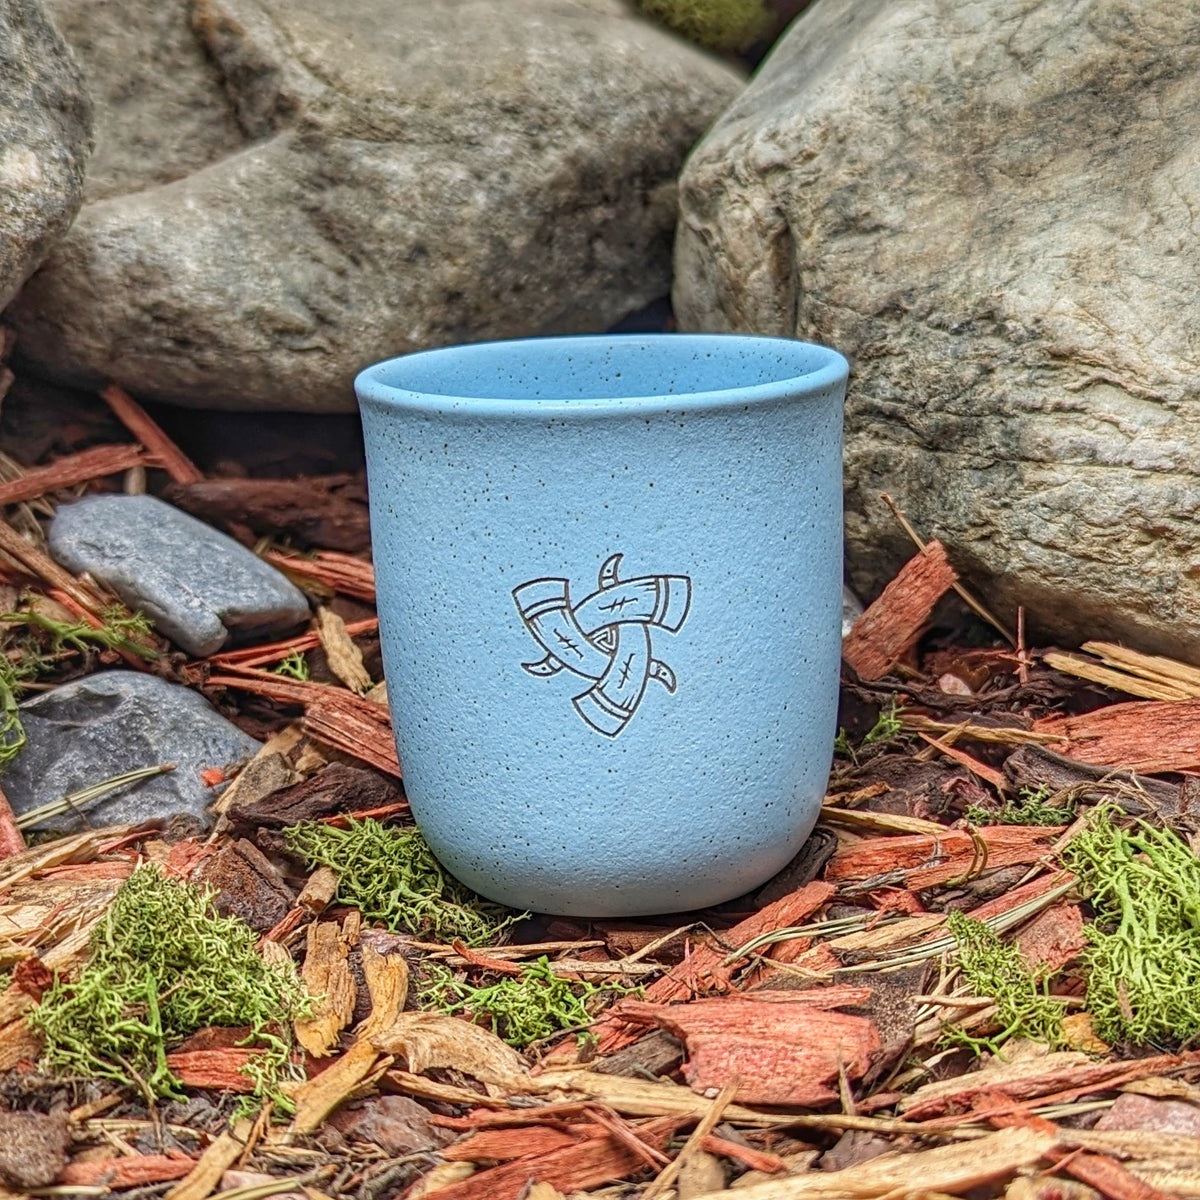 Freya's Cup